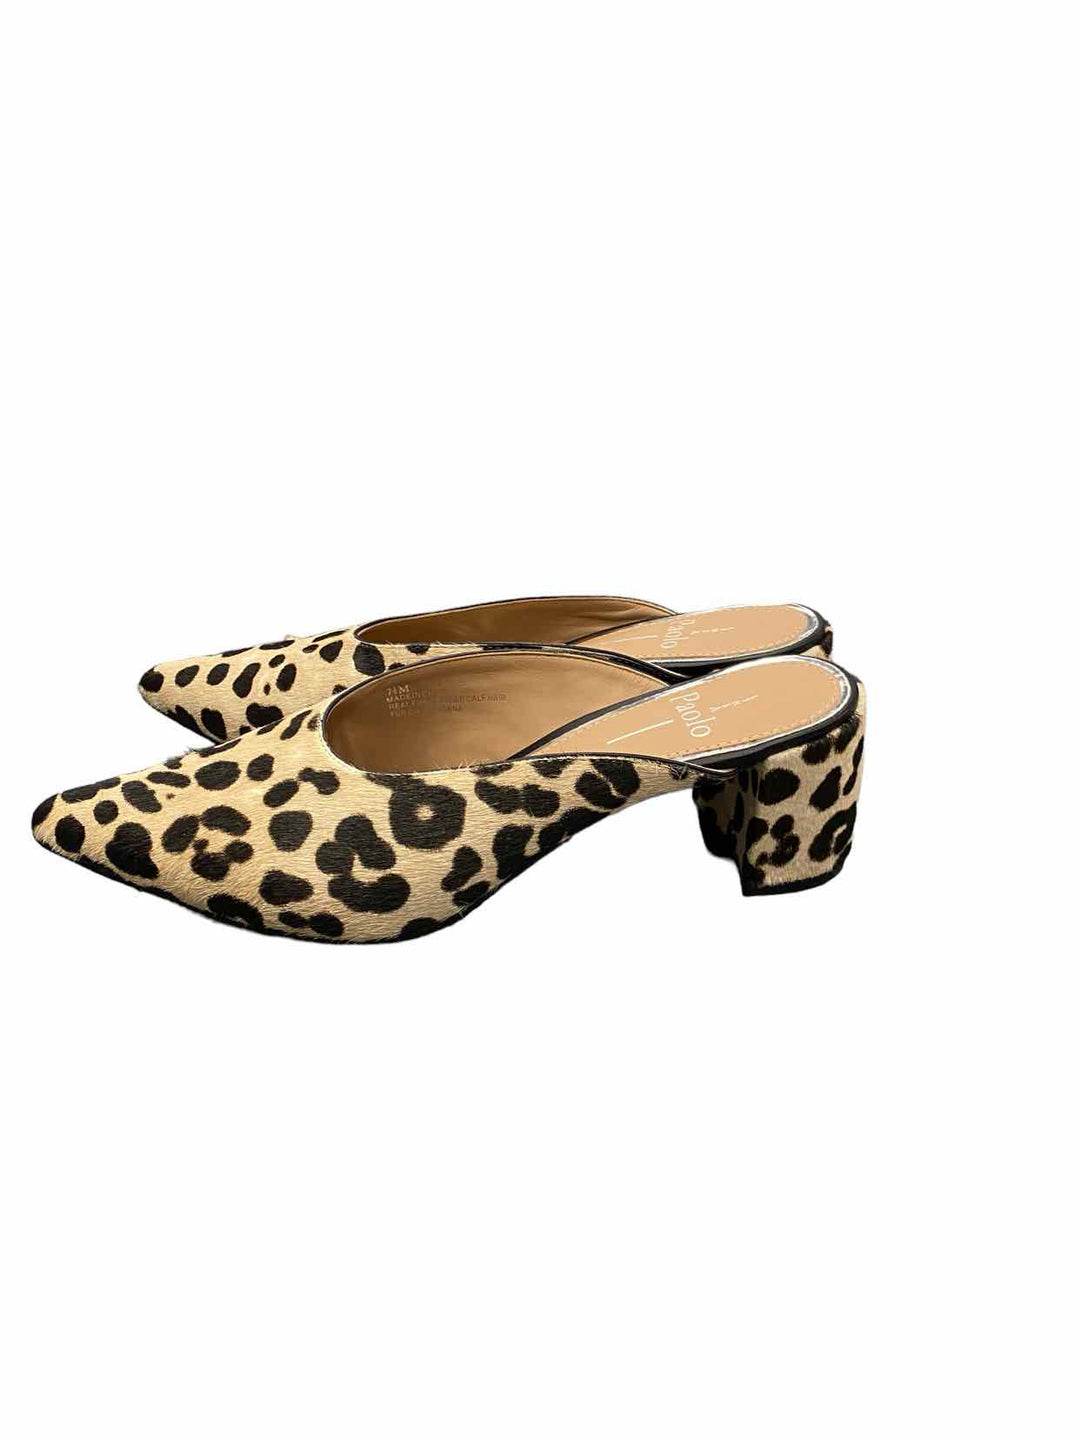 Linea Paolo Shoe Size 7.5 Cream Brown Calf Hair Mules Heels